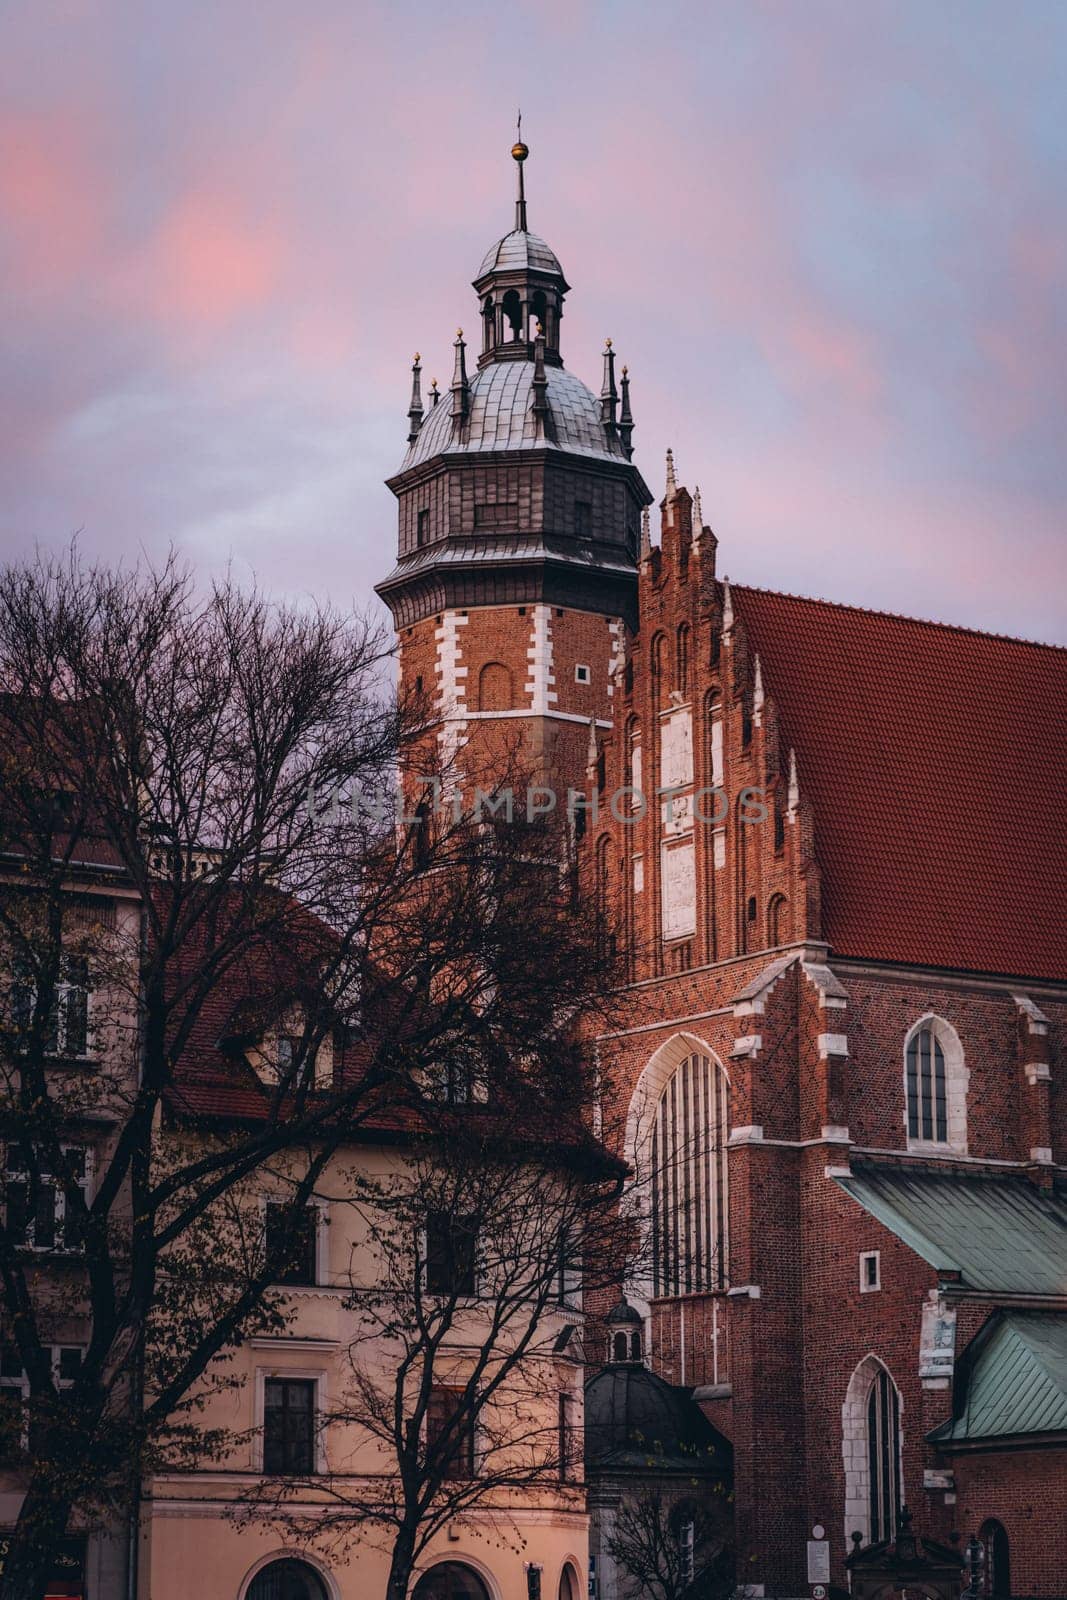 Corpus Christi Basilica and vintage buildings at sunset, Krakow, Poland by Popov